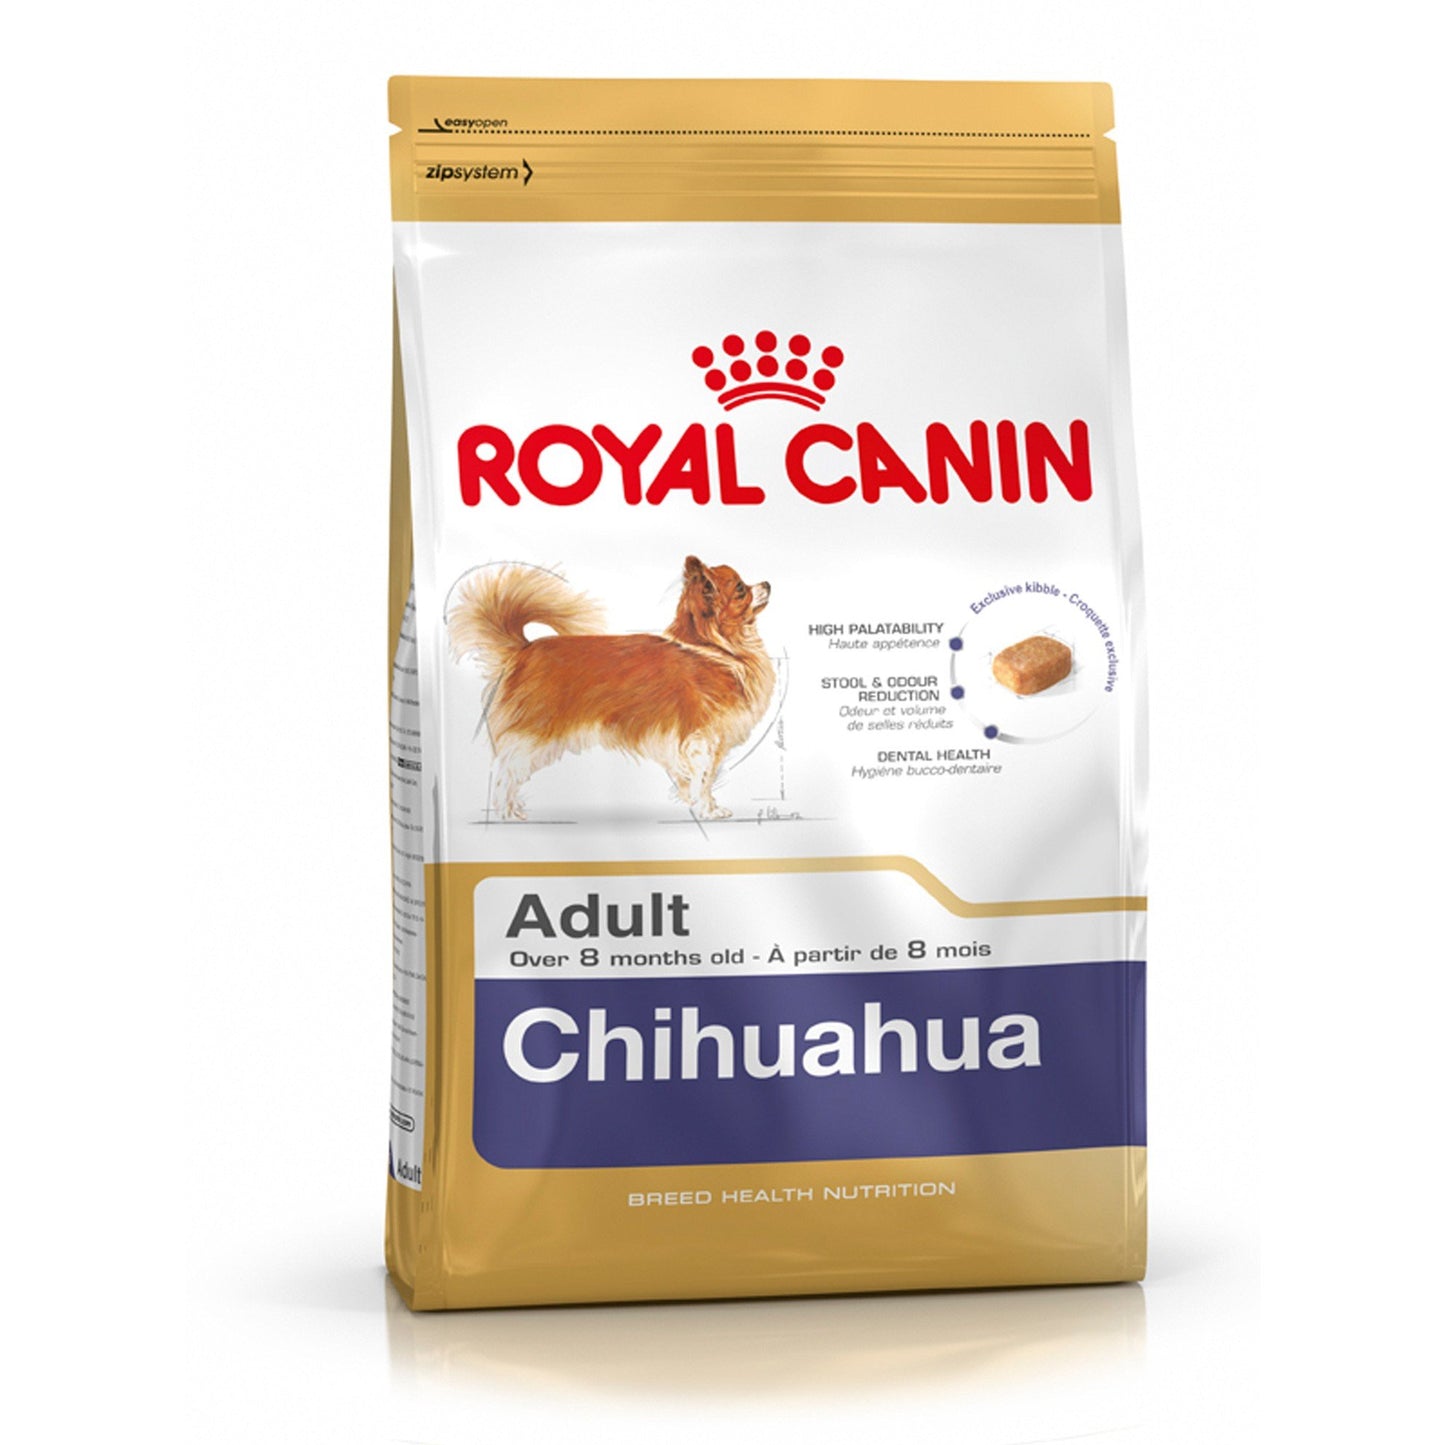 Royal Canin Chihuahua 1.5Kg Adult